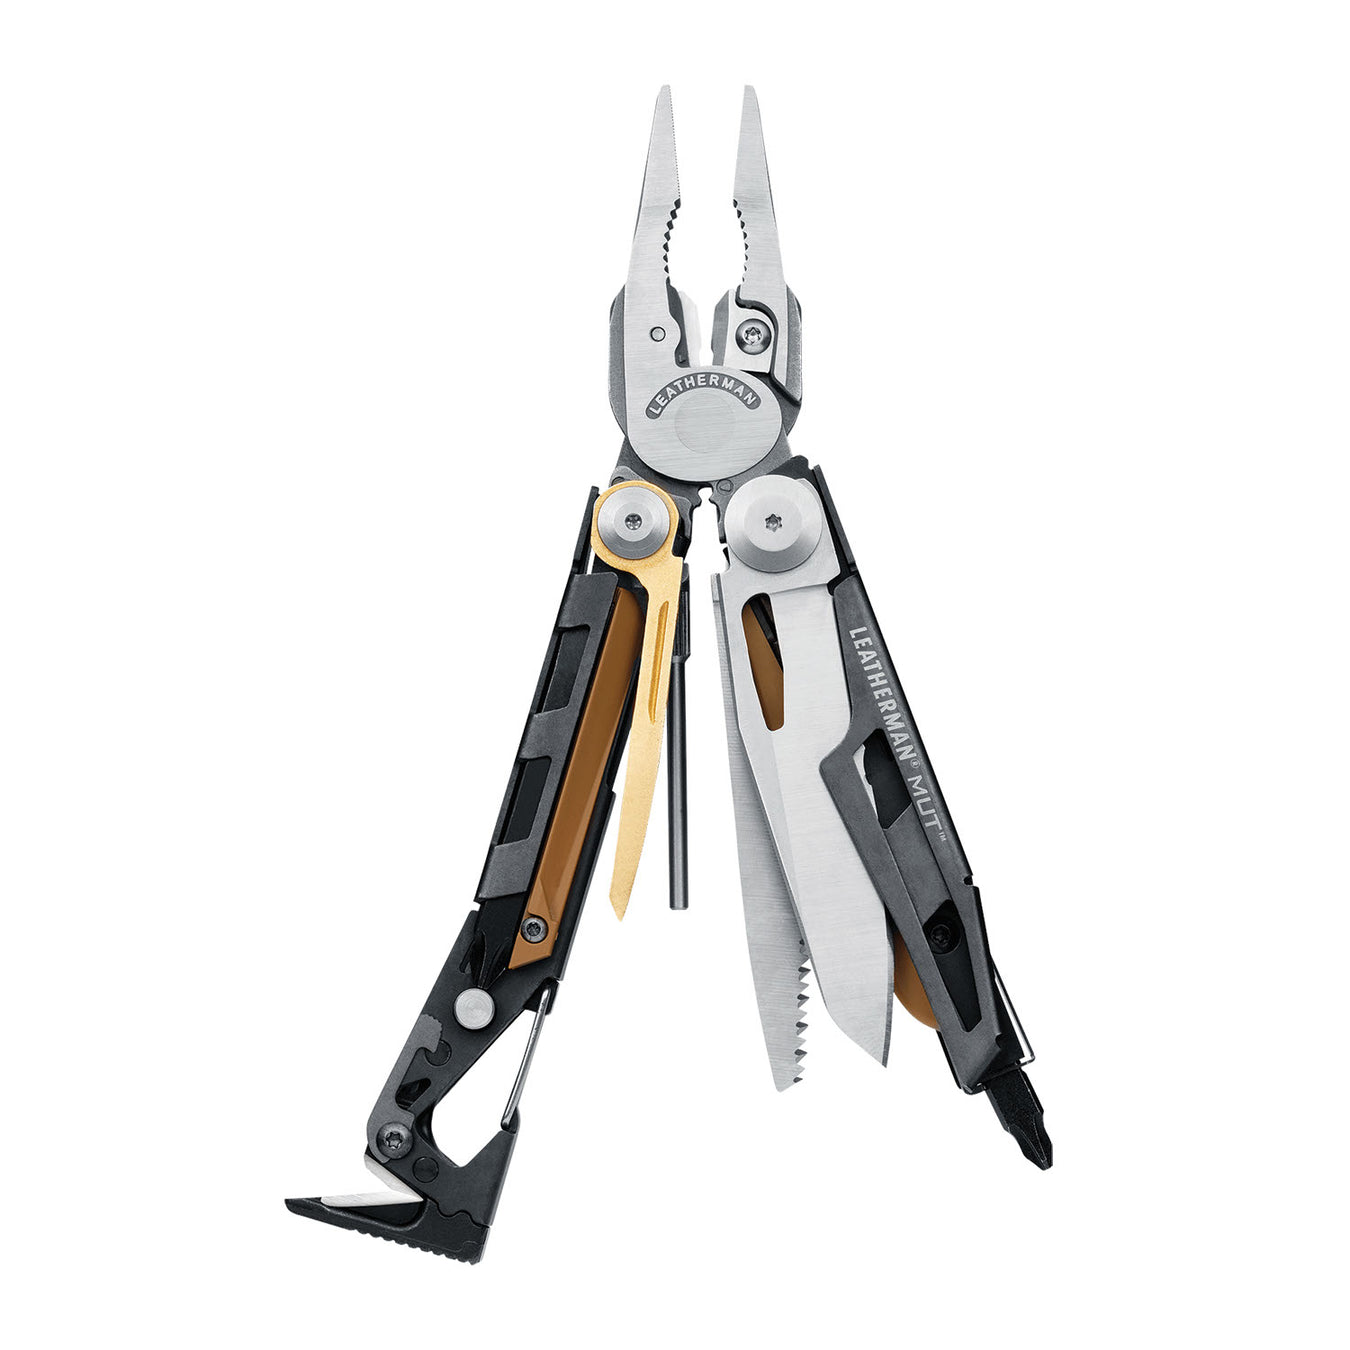 Knives / Multi-tools